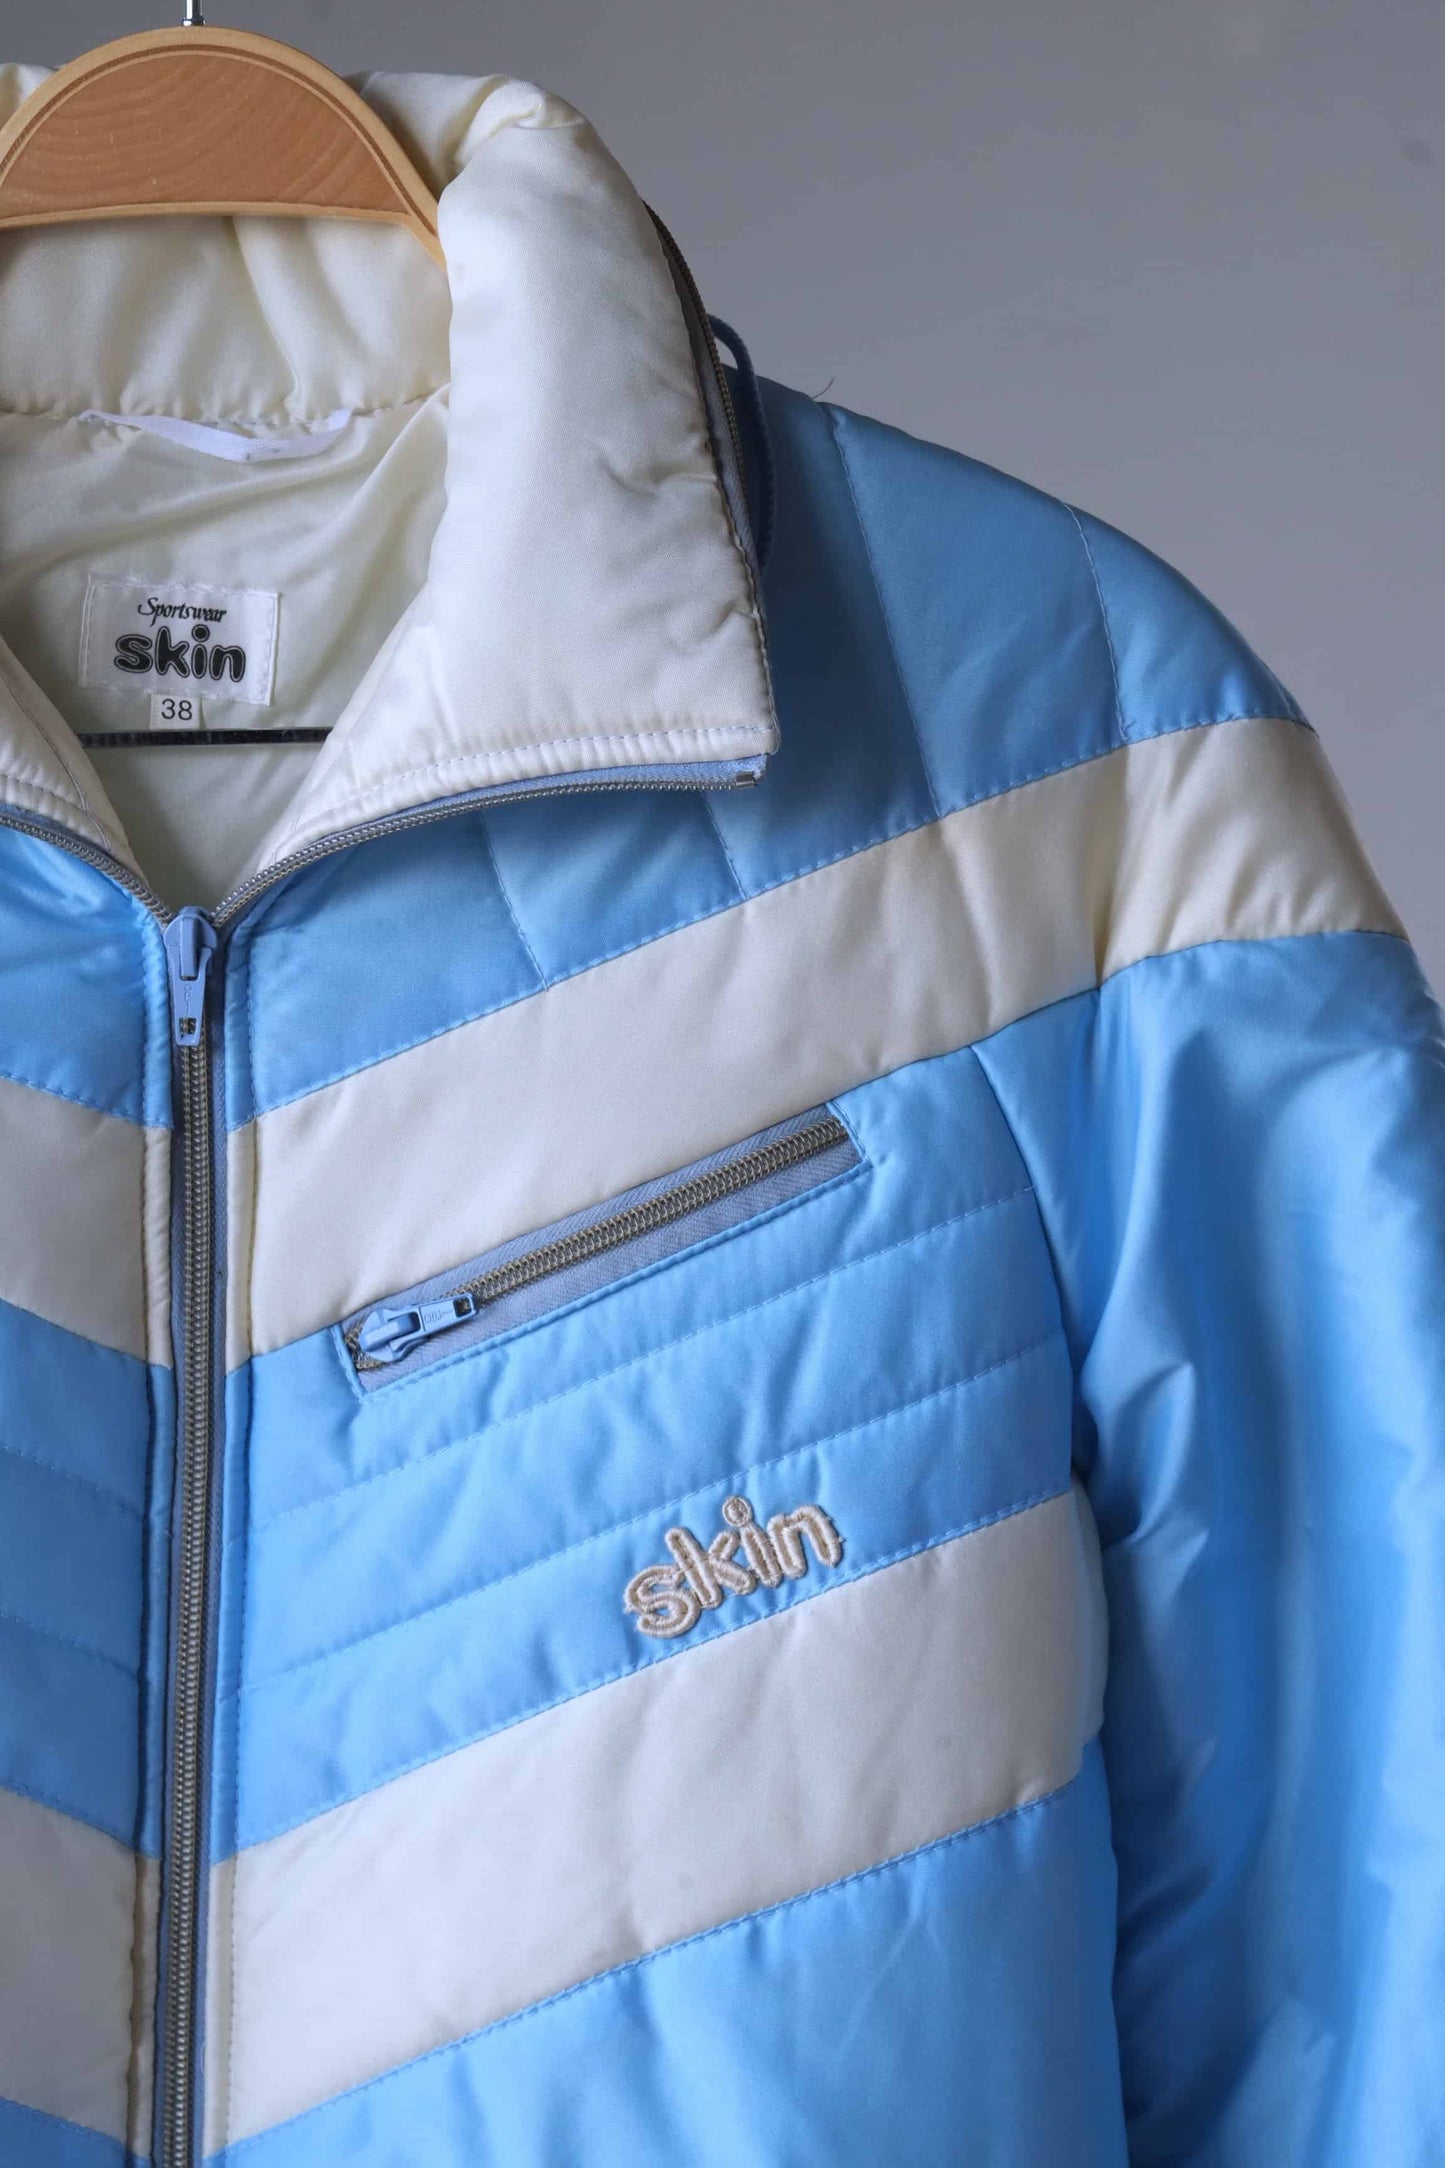 Vintage Women's 80's Ski Jacket close up